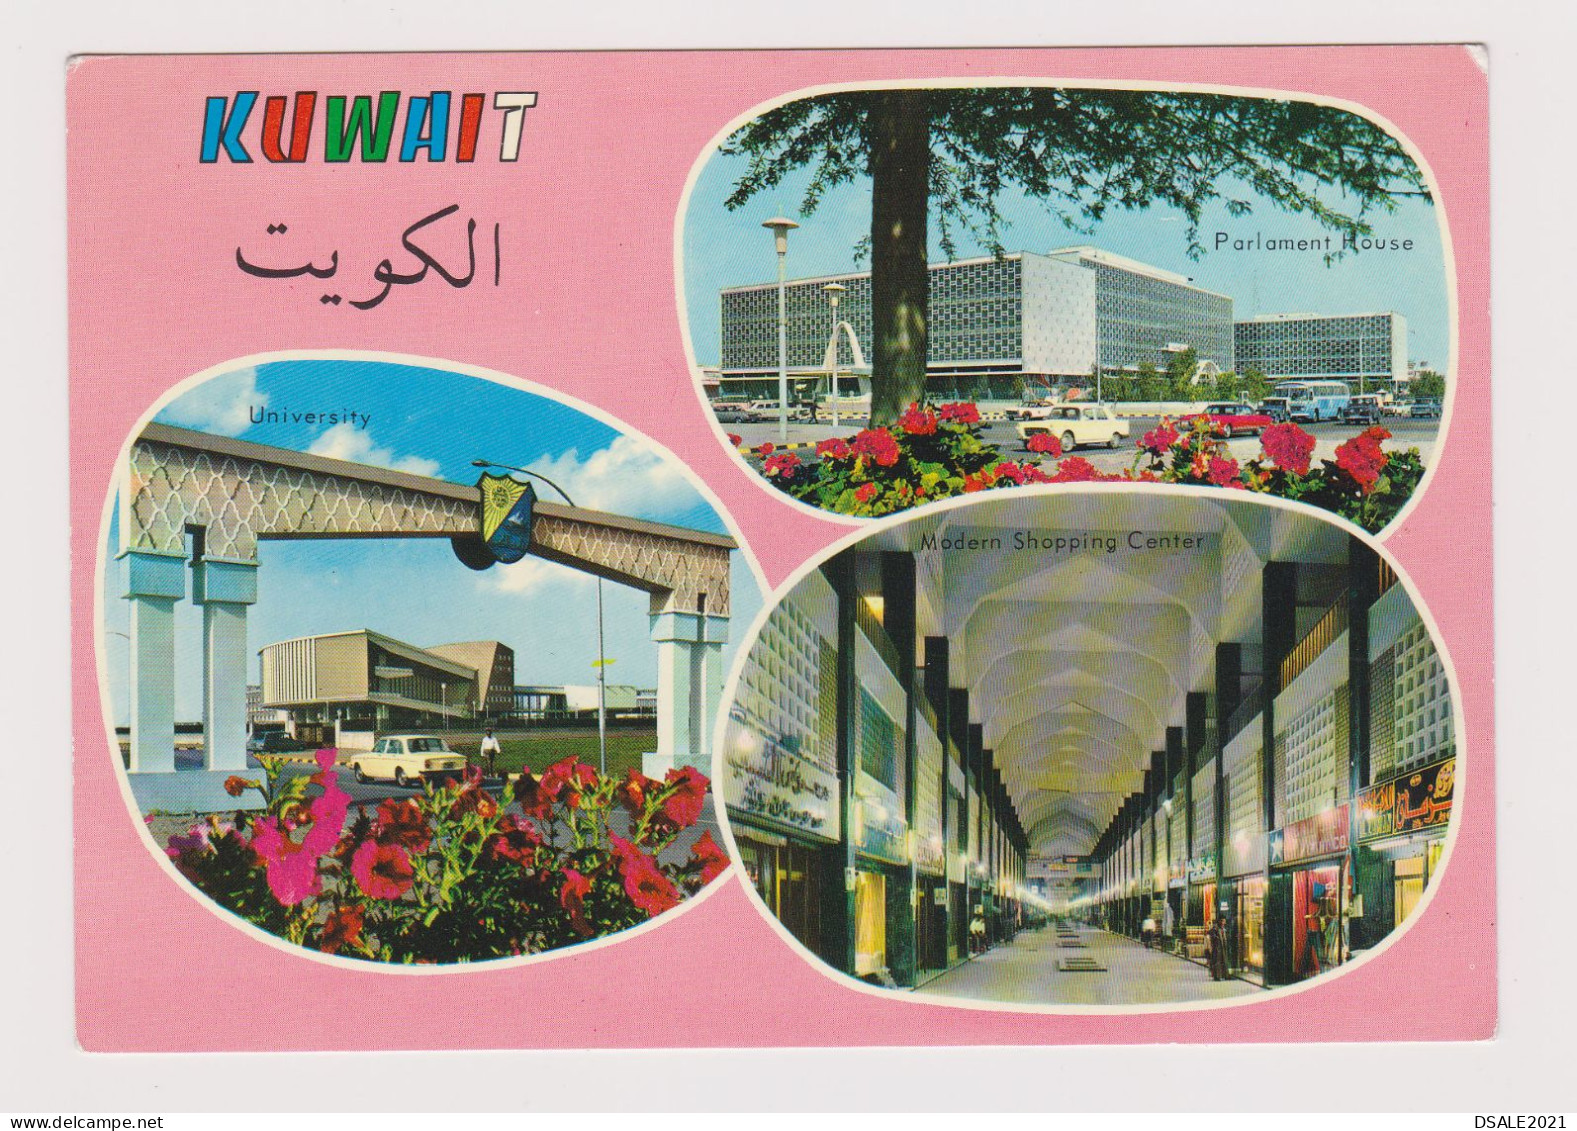 KUWAIT University, Old Car, Parliament House, Shopping Center, View Vintage Photo Postcard RPPc AK (1311) - Koeweit